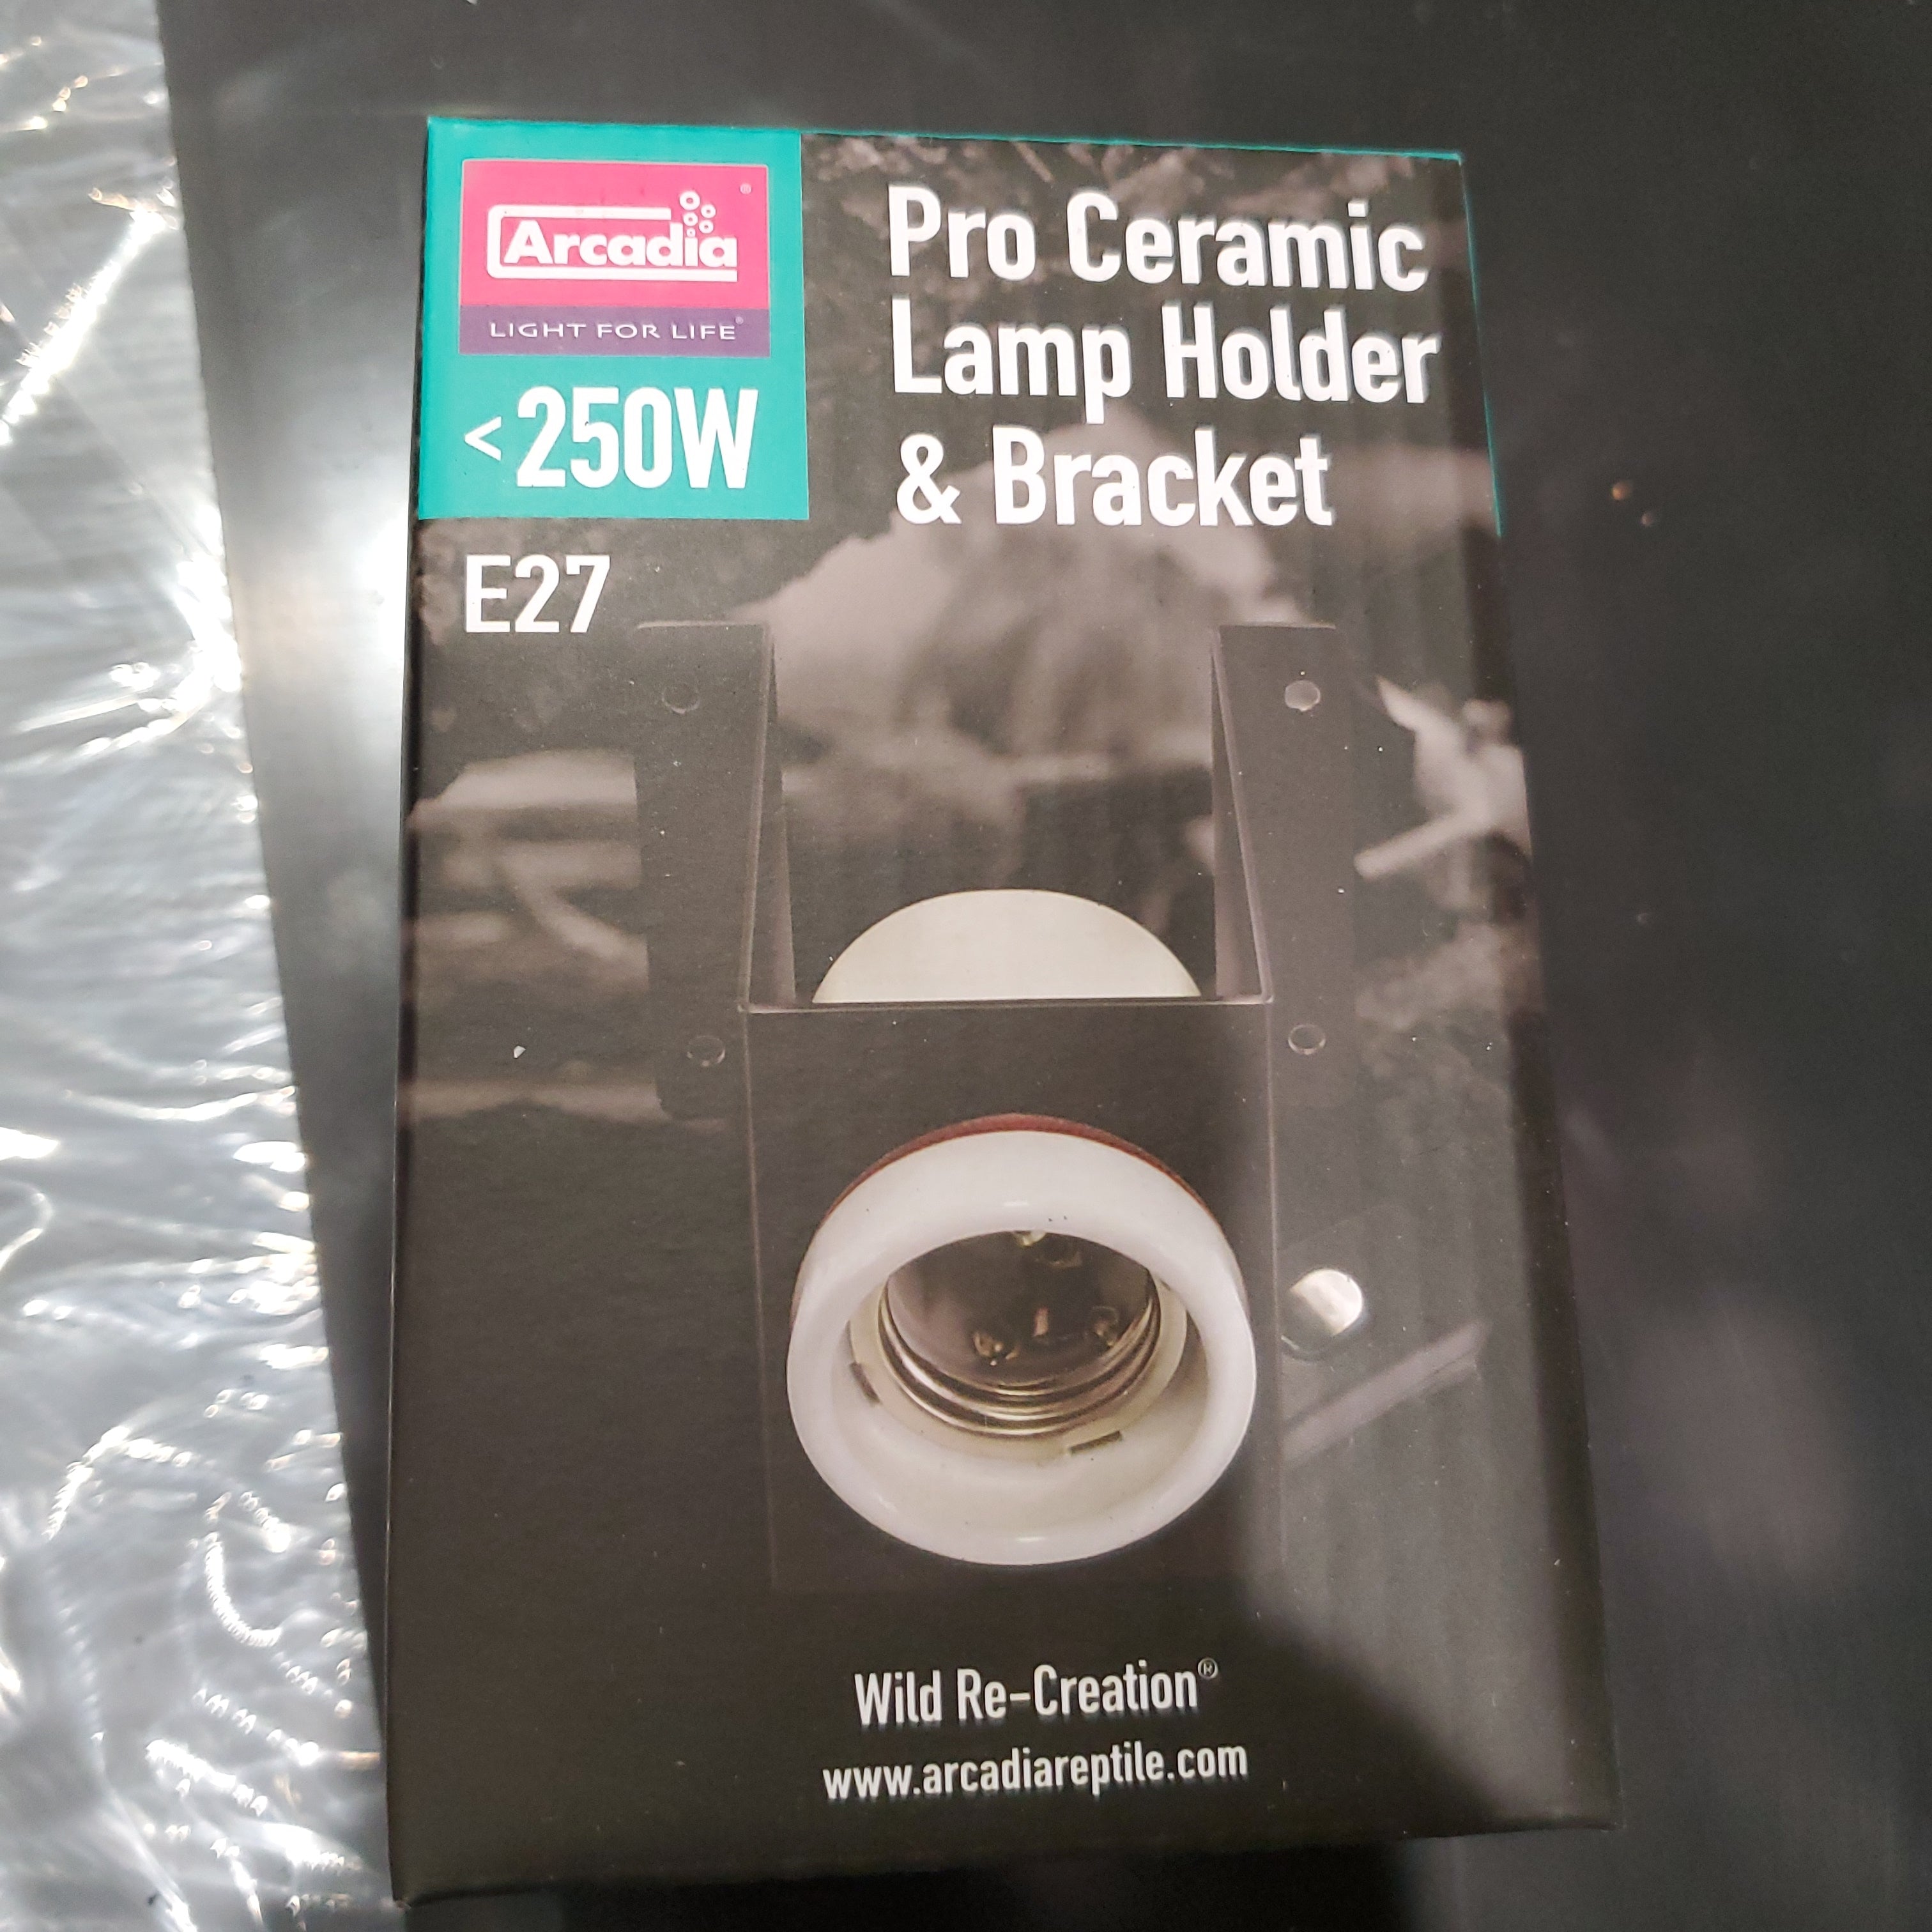 Arcadia pro ceramic lamp holder & bracket